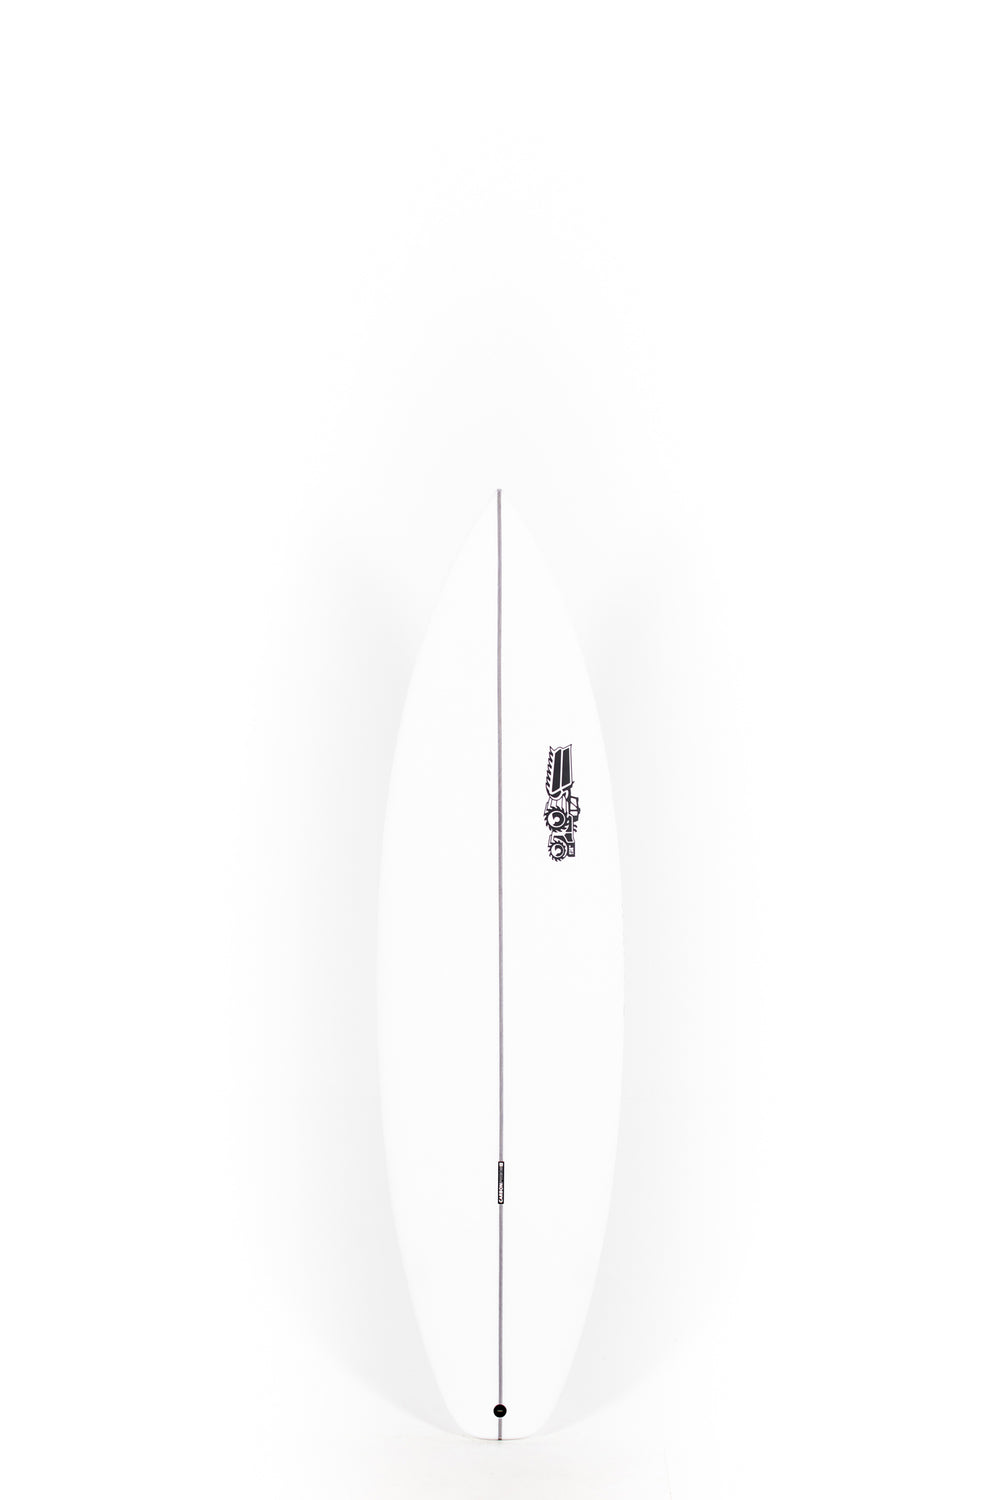 Pukas Surf Shop - JS Surfboards - MONSTA 2020 - 6'0